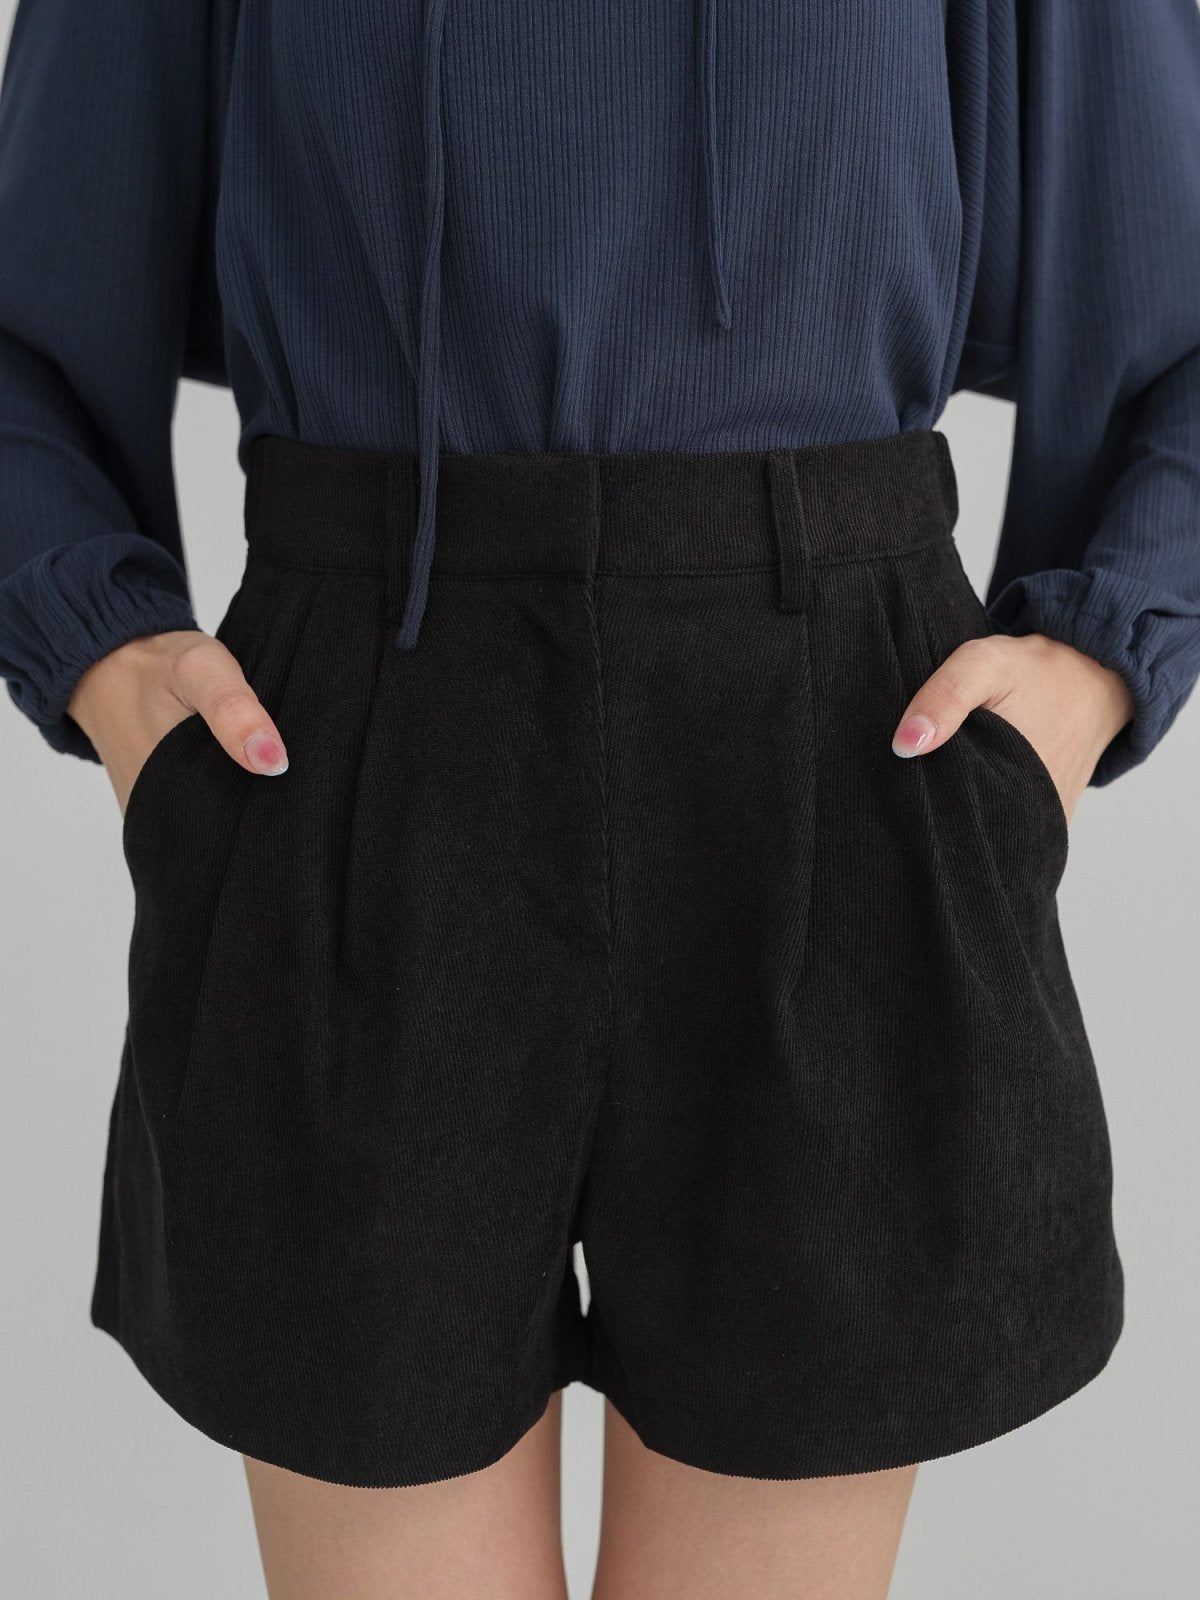 Corduroy Pleated Shorts - DAG-DD1385-24BlackS - Black - S - D'zage Designs